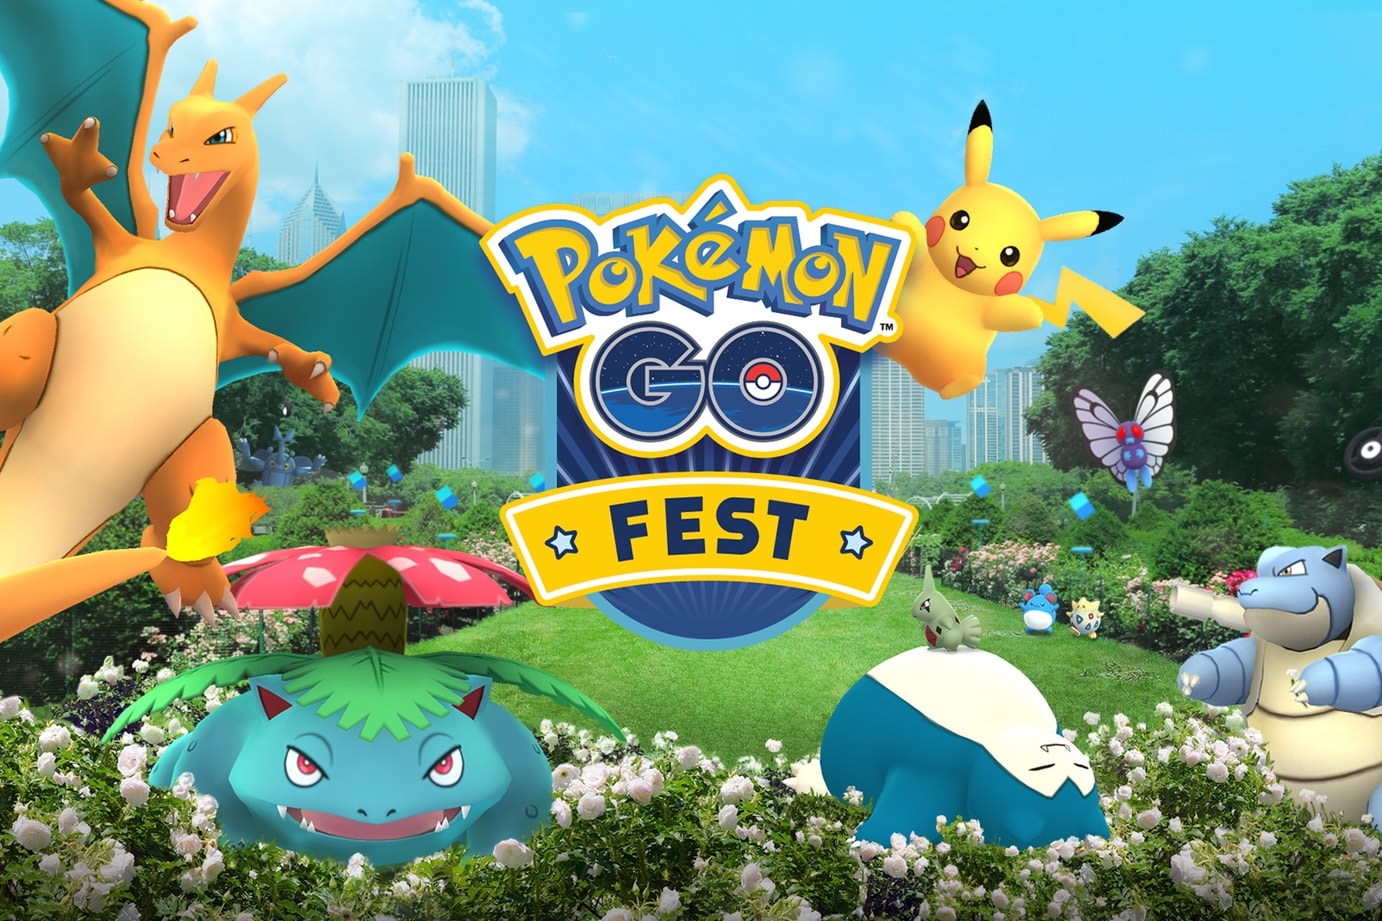 Pokémon GO First Anniversary Special Events